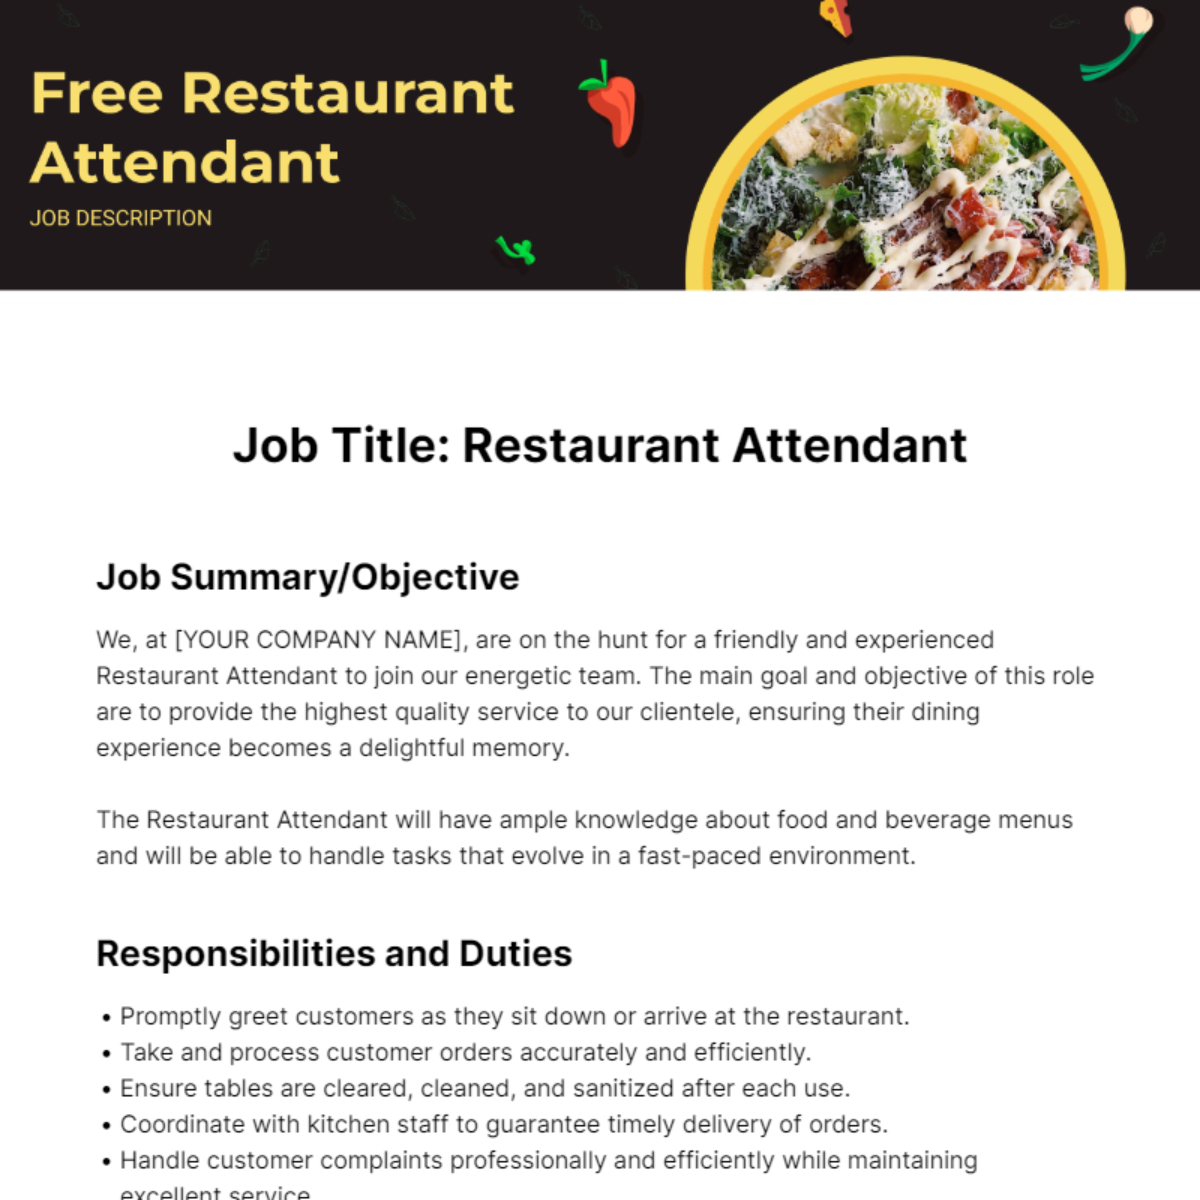 Free Restaurant Attendant Job Description Template